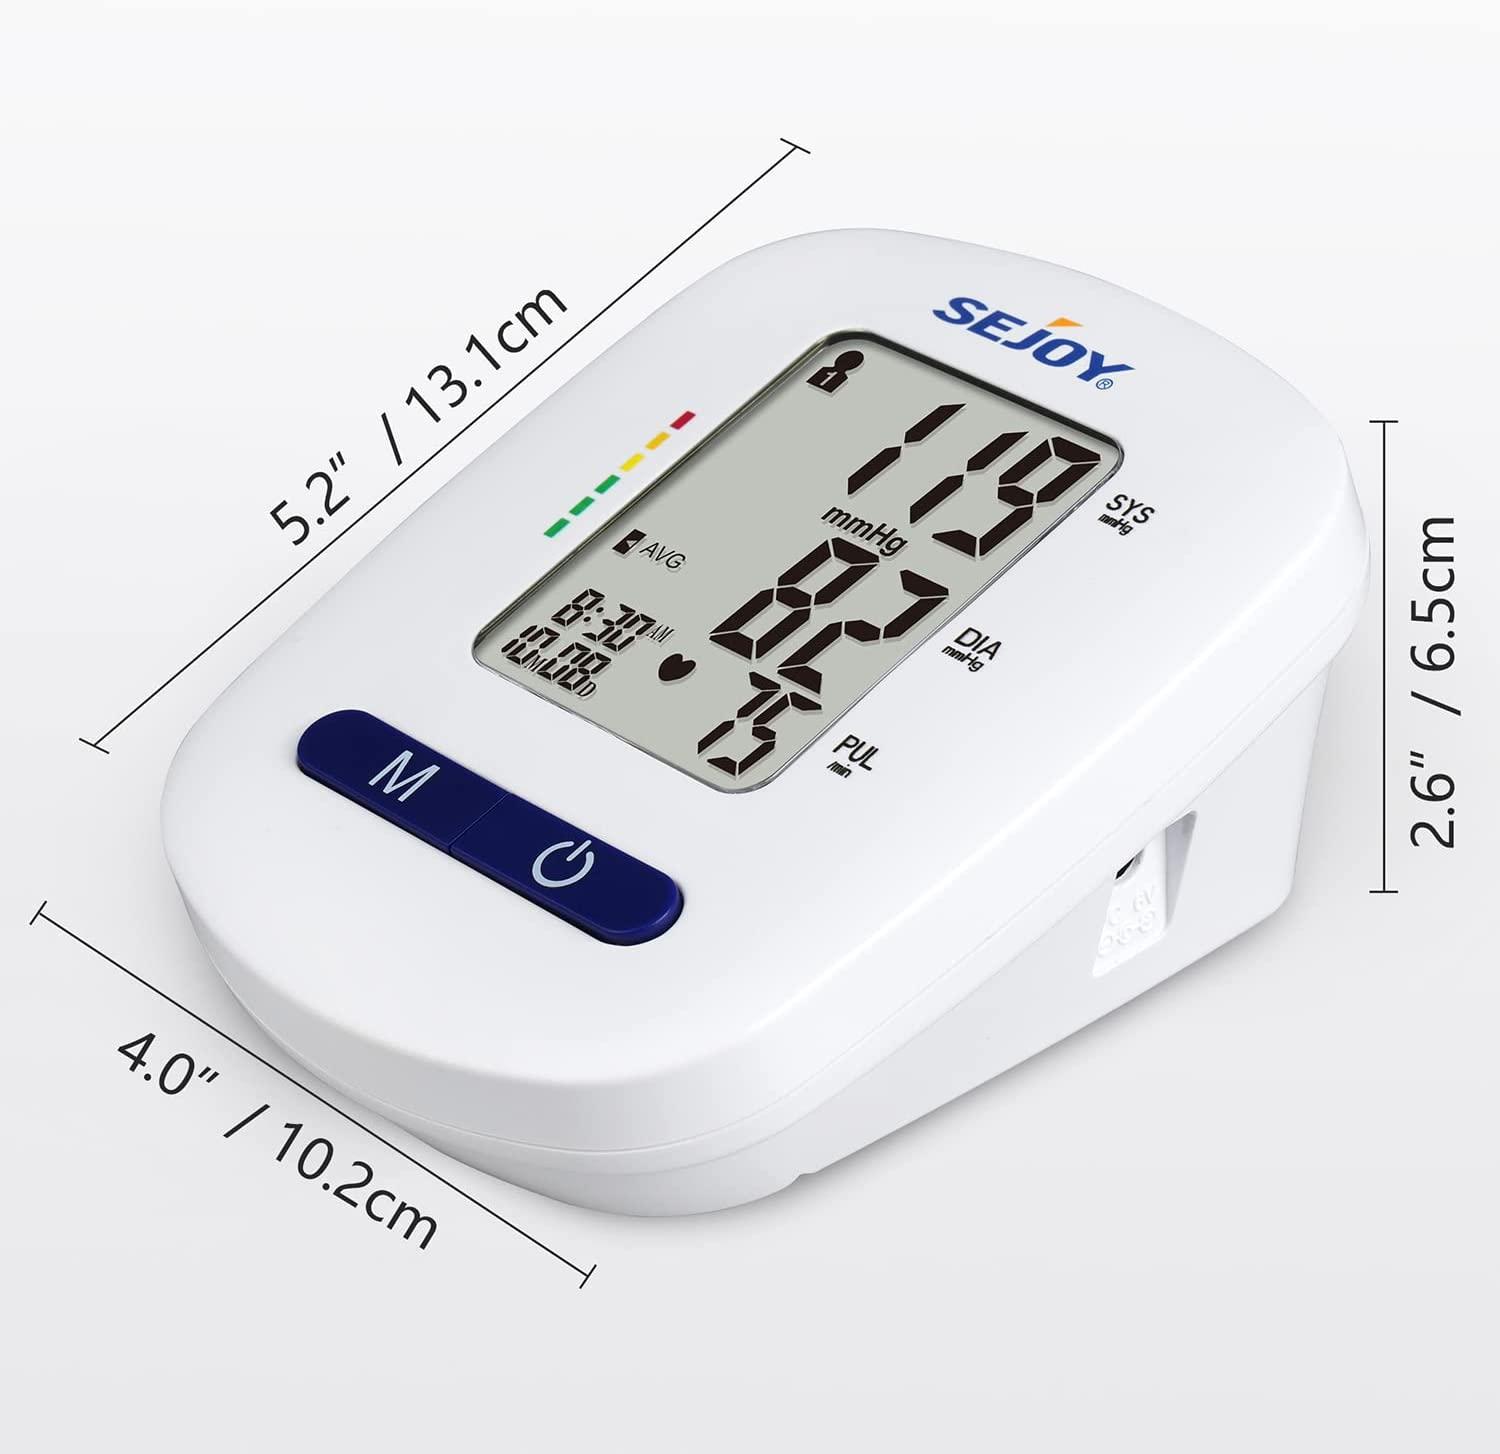 Are Blood Pressure Monitors Accurate?